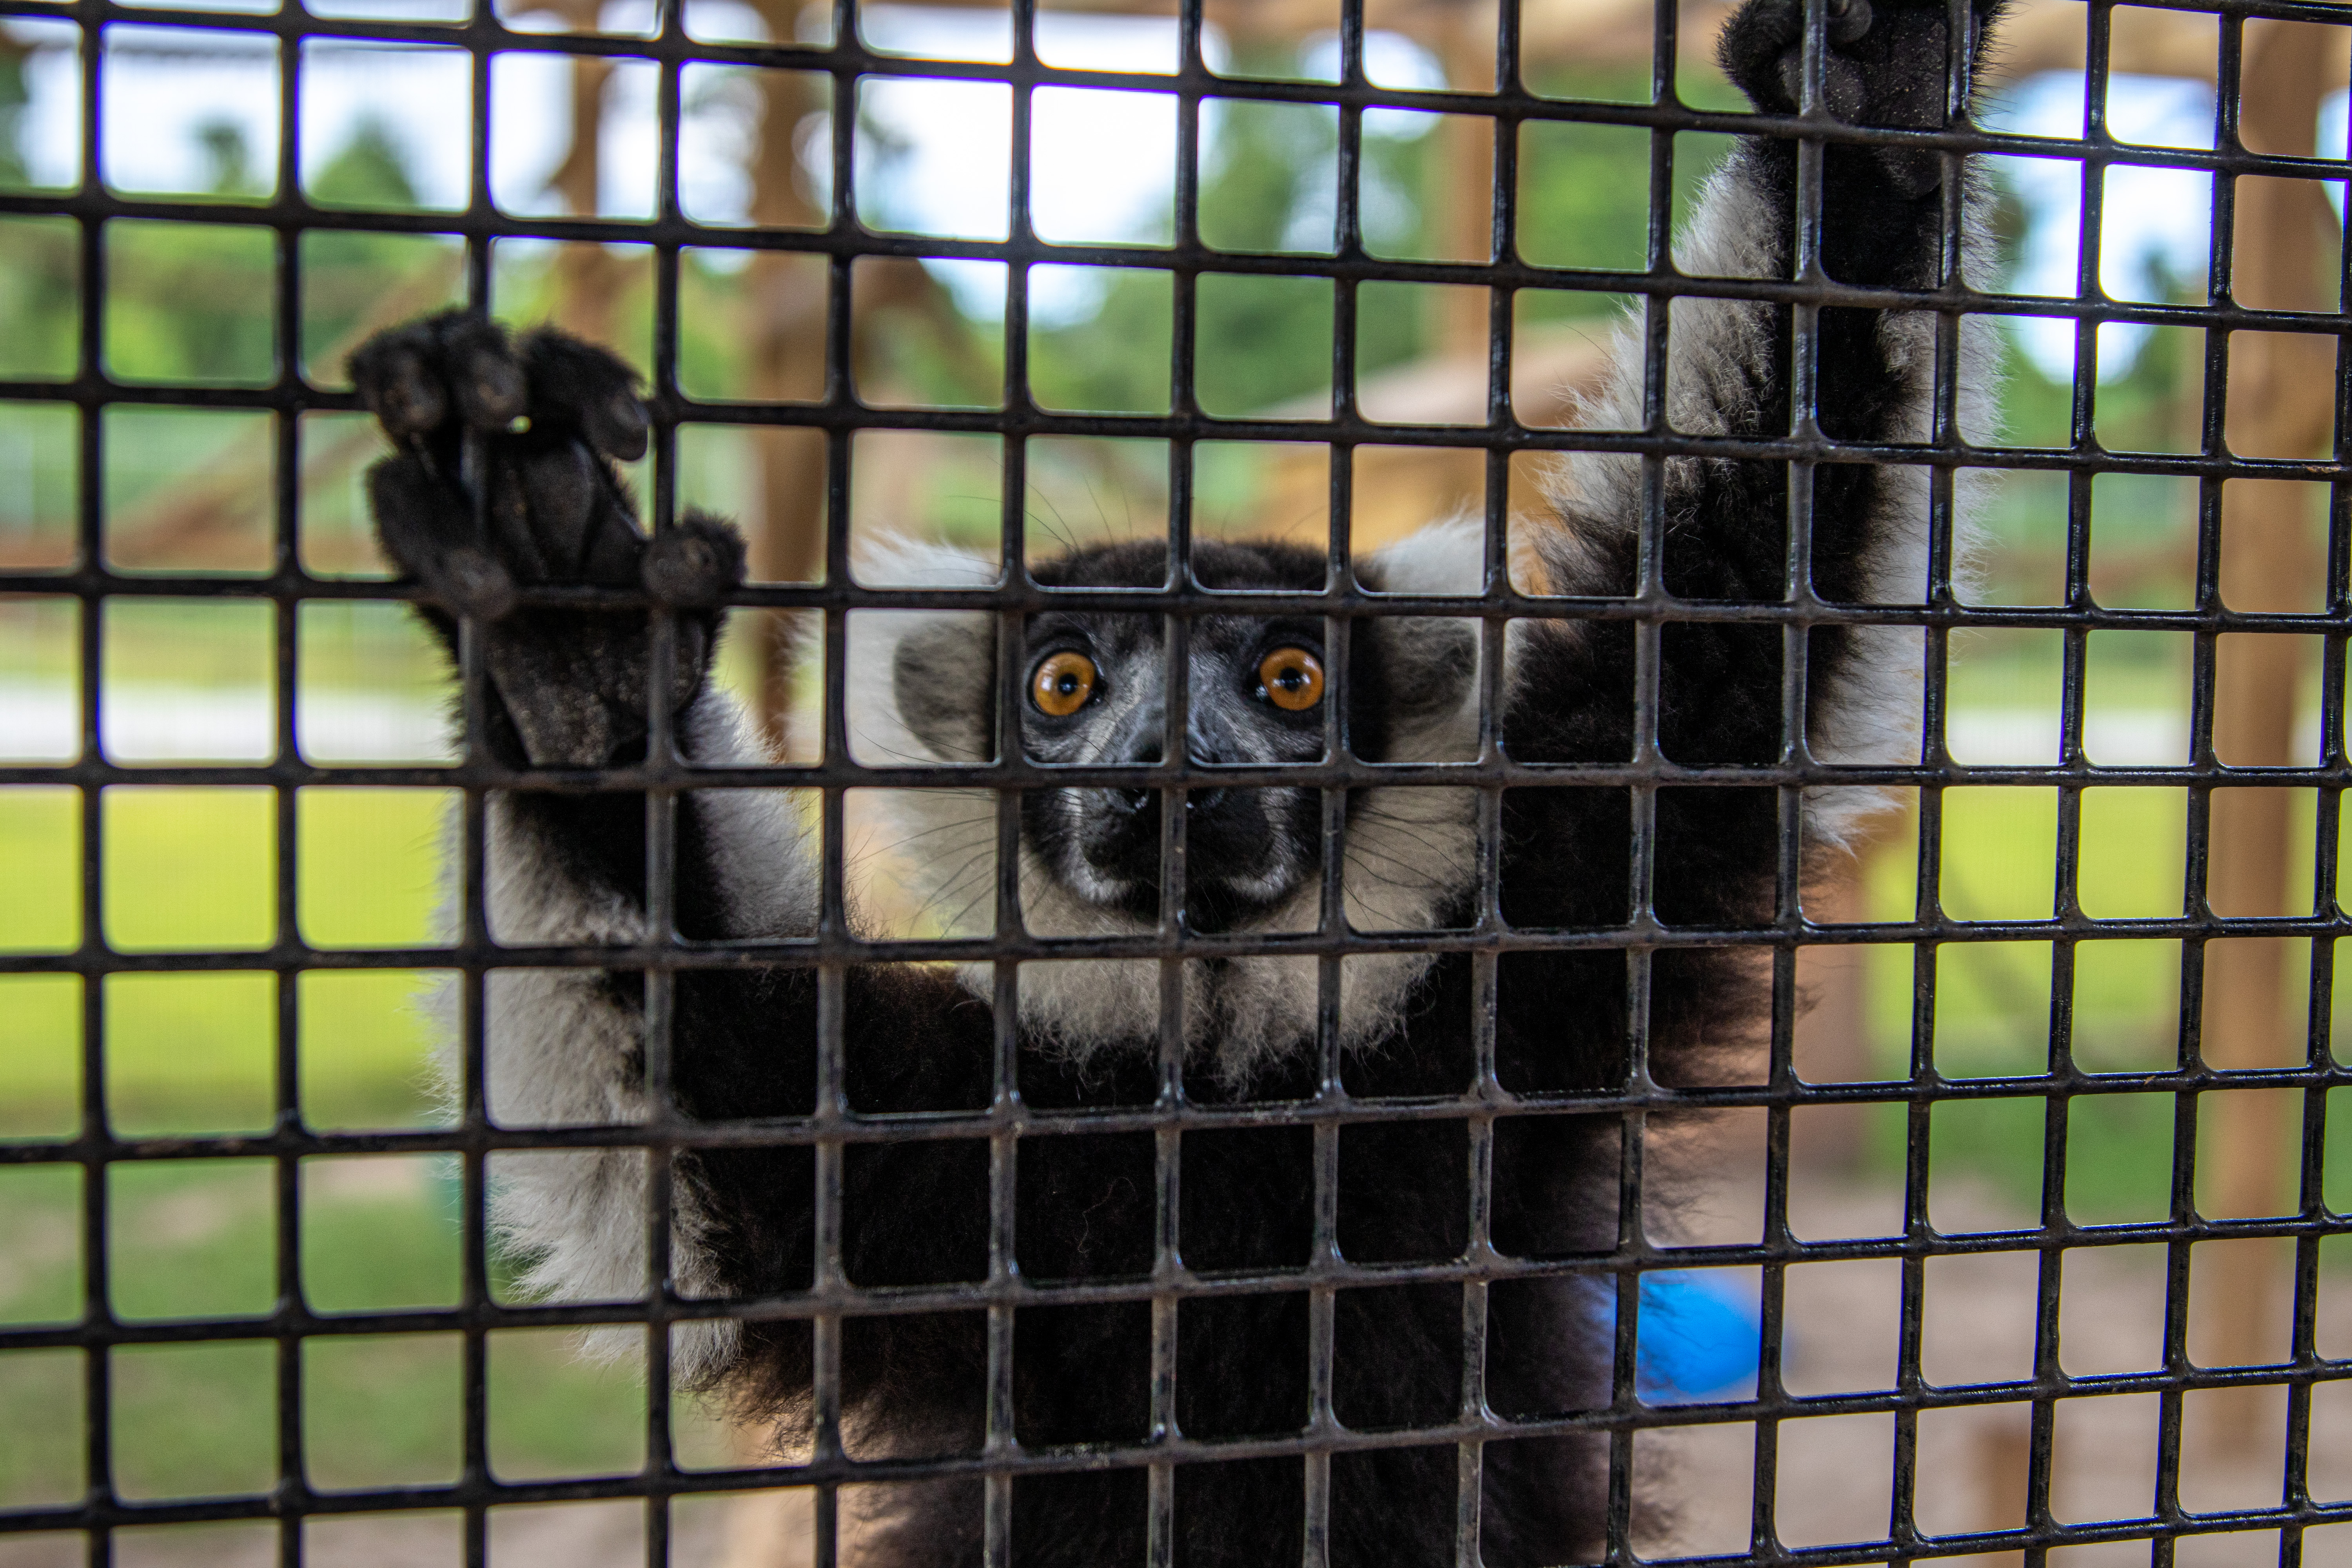 Mirabell the Lemur